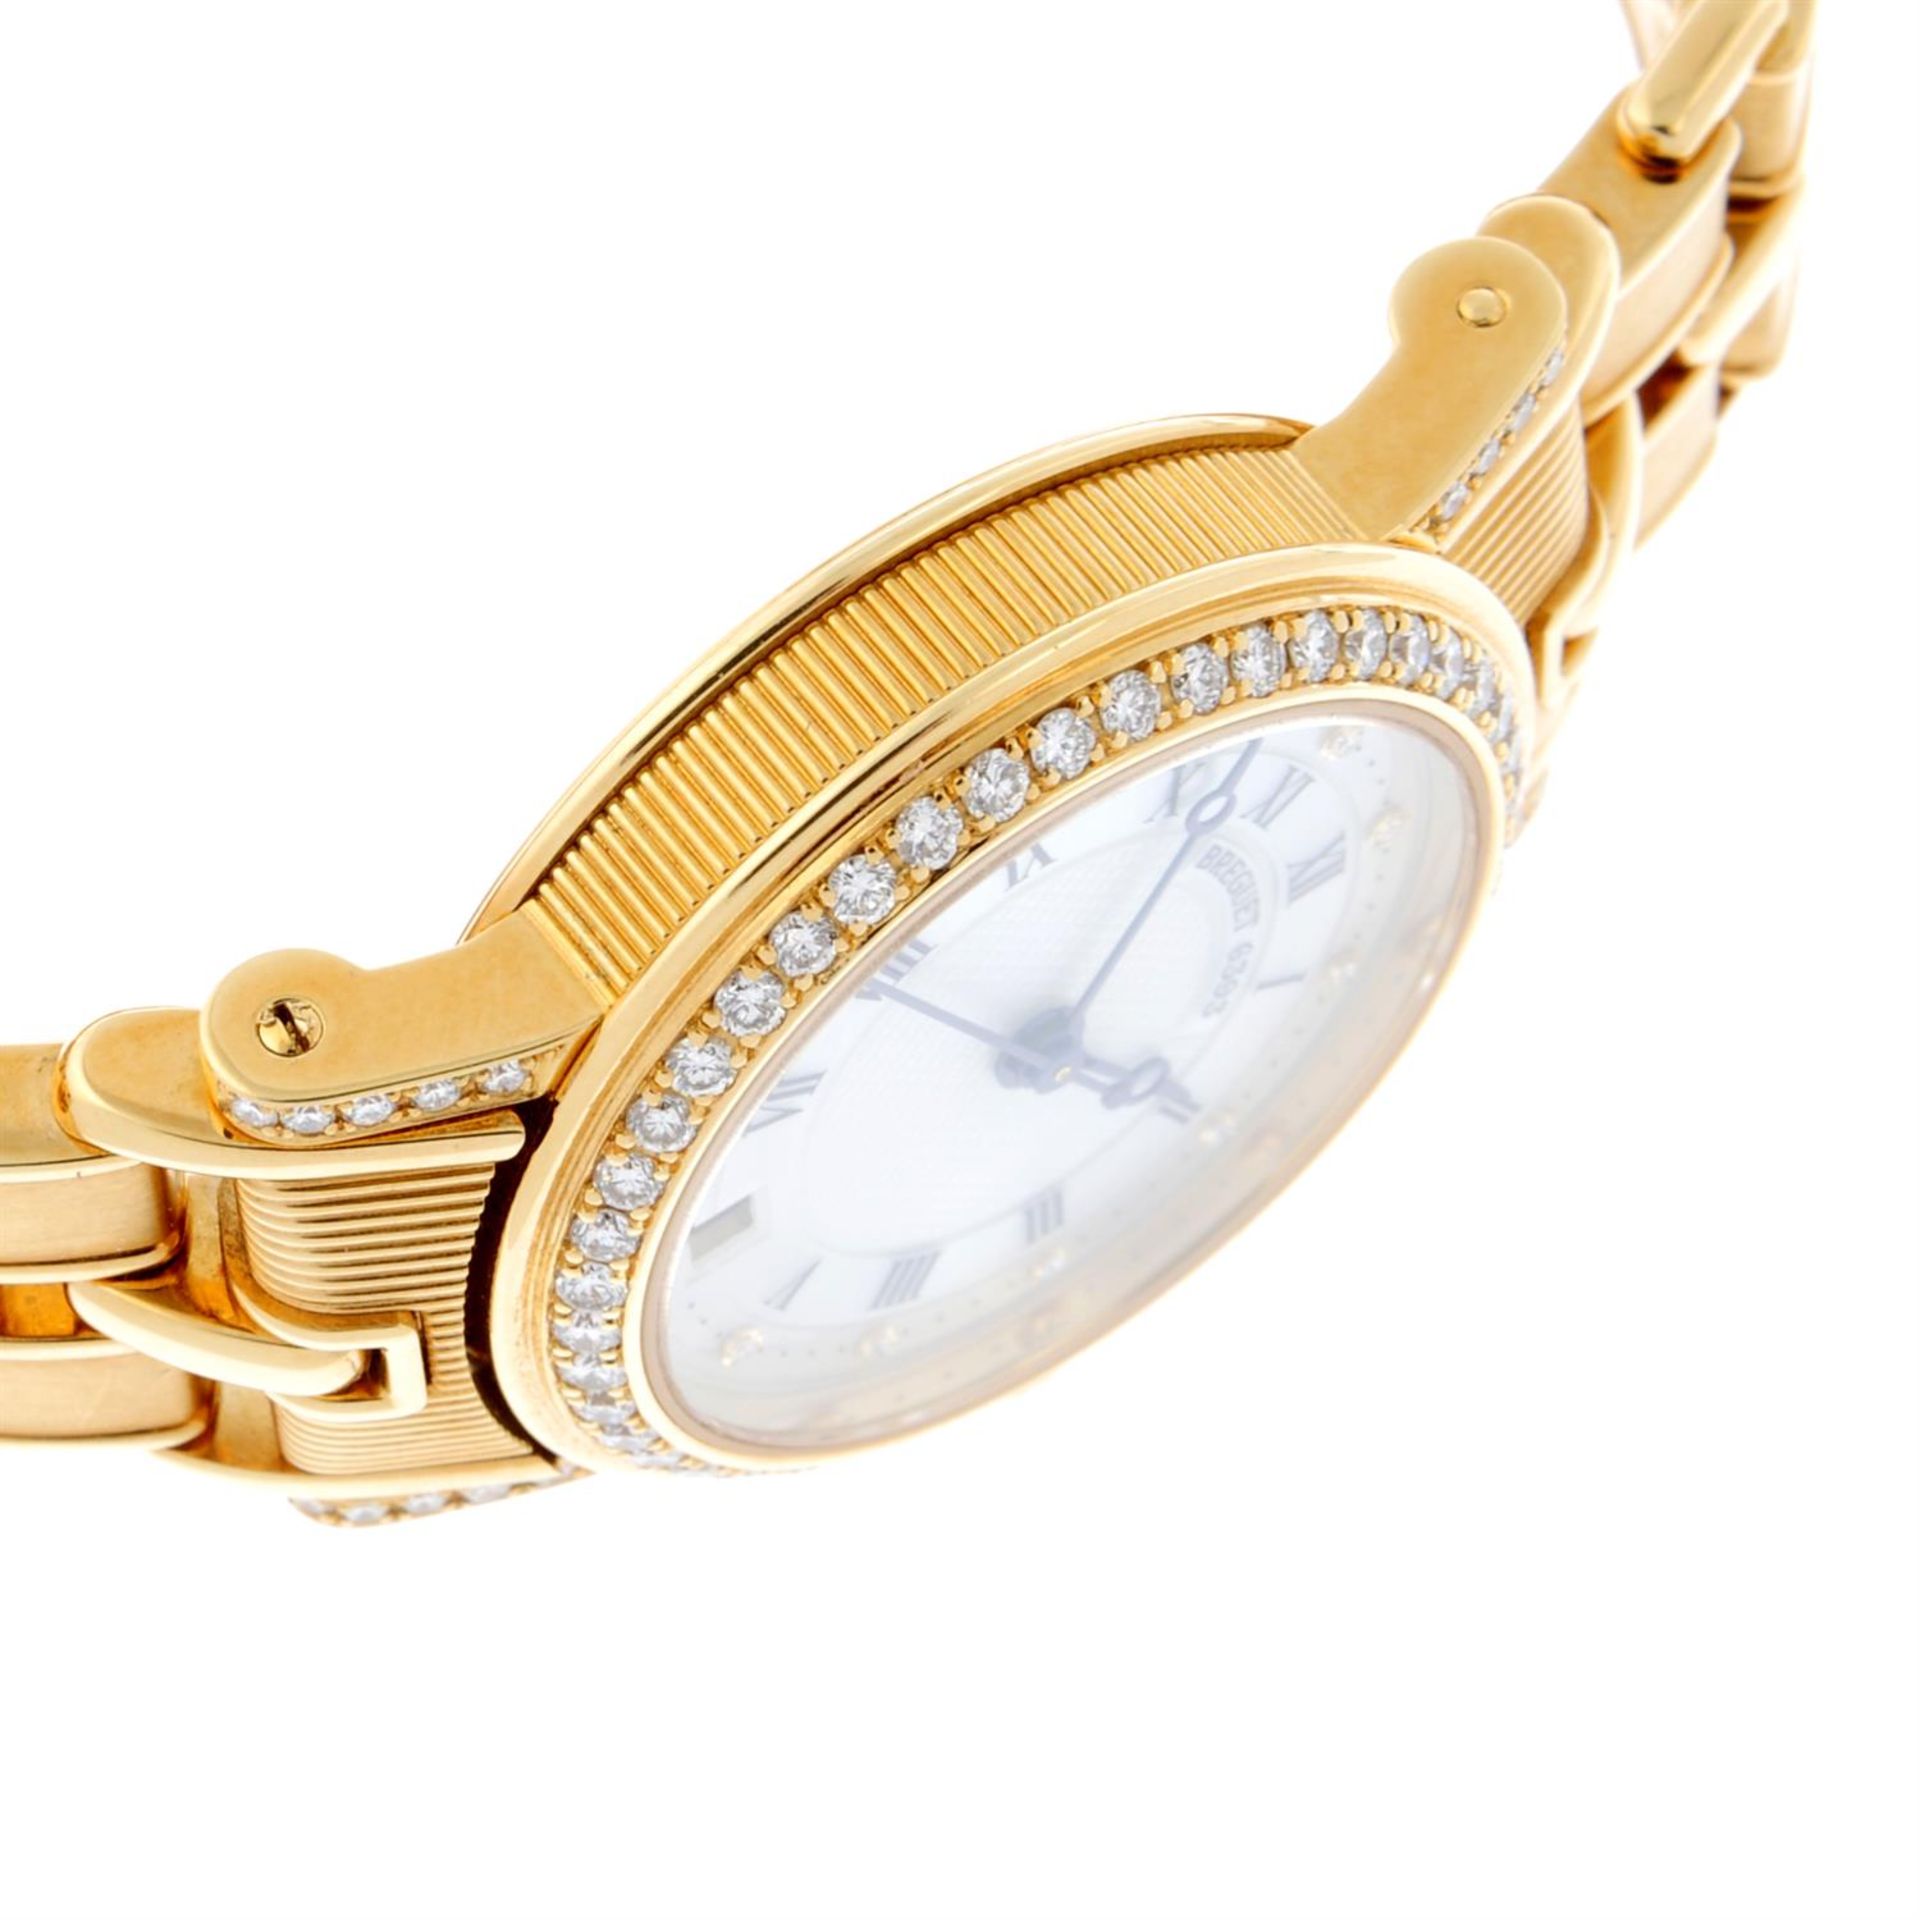 BREGUET - a diamond set 18ct yellow gold Horloger De La Marine bracelet watch, 26mm. - Bild 4 aus 7